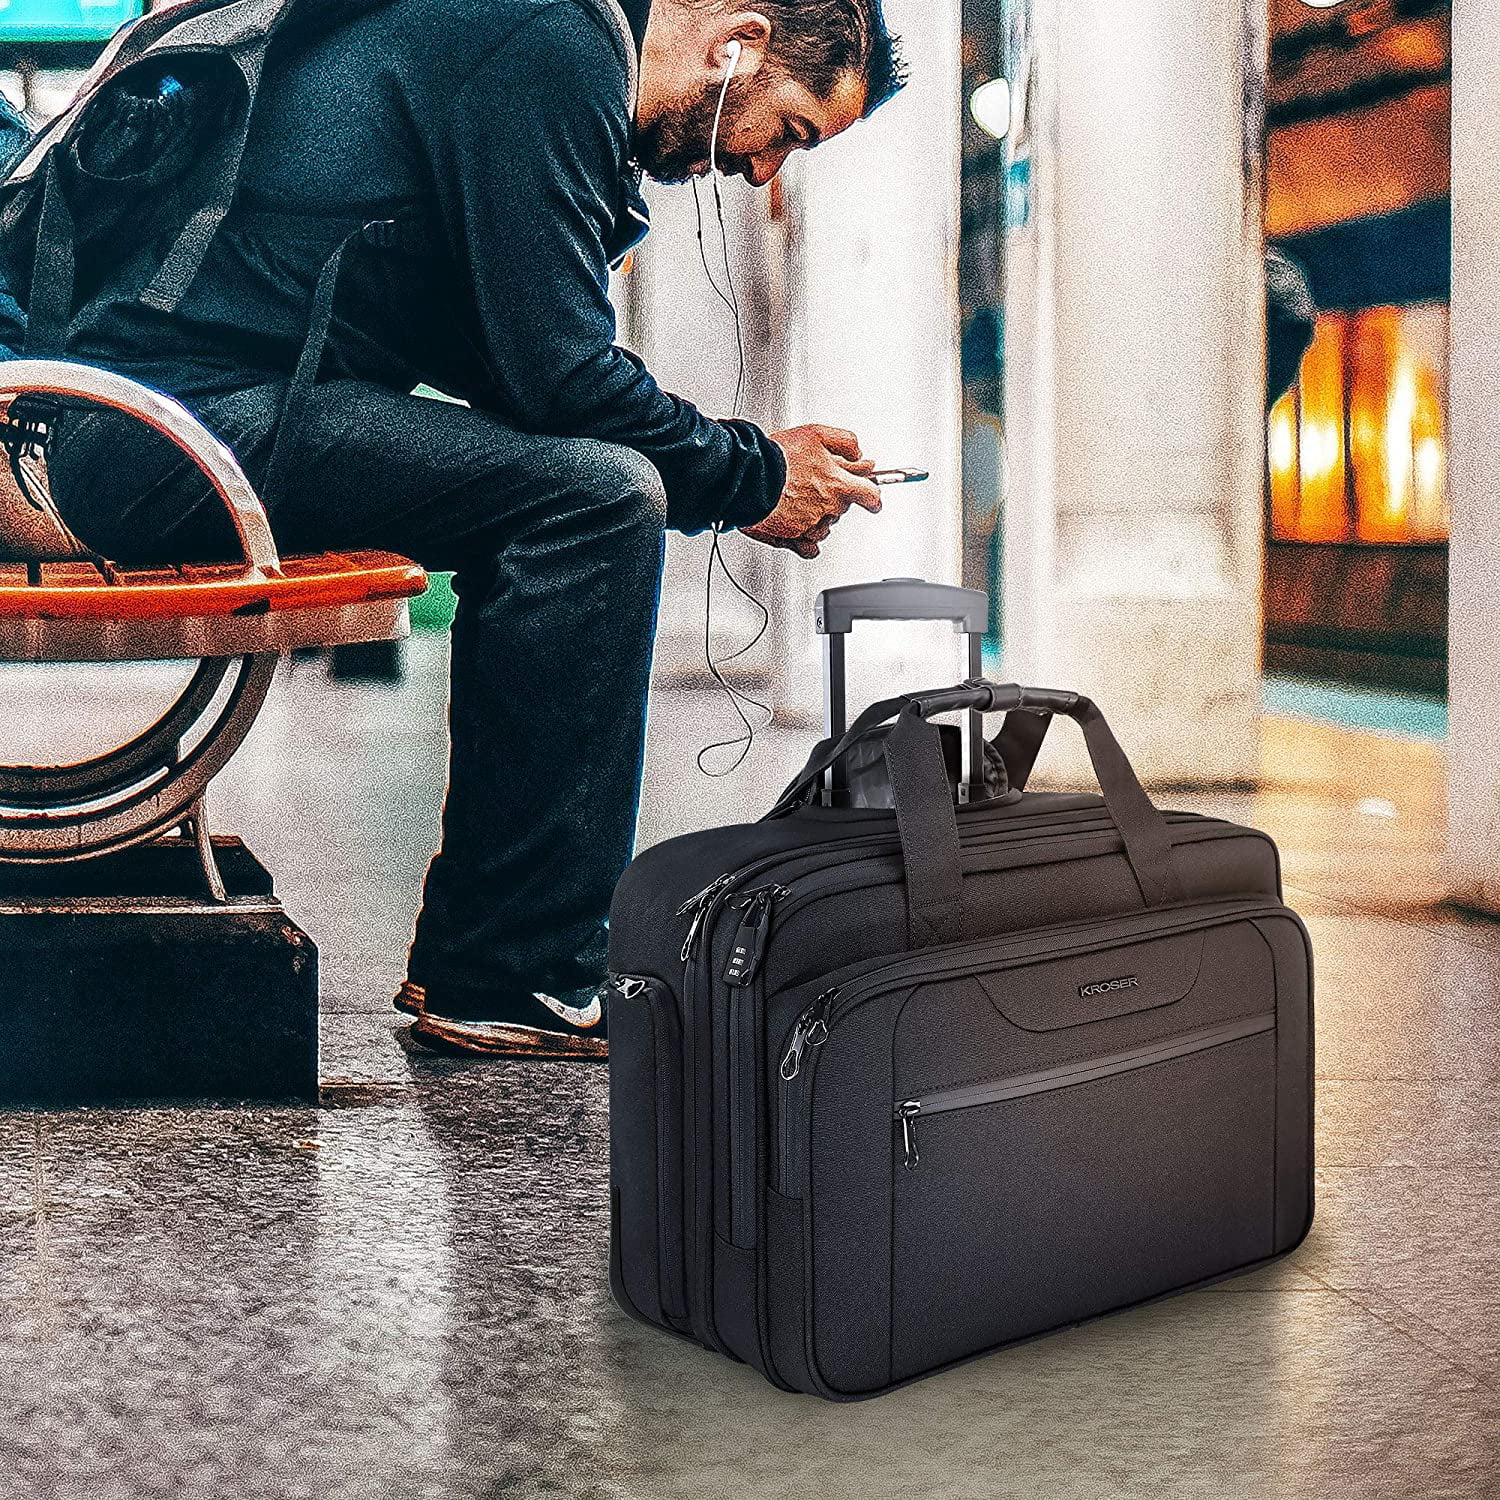 HYATT Leather Accessories 46 Liters Black Leather Laptop Suitcase Bag 4  Wheels 55 Cm : Amazon.in: Fashion